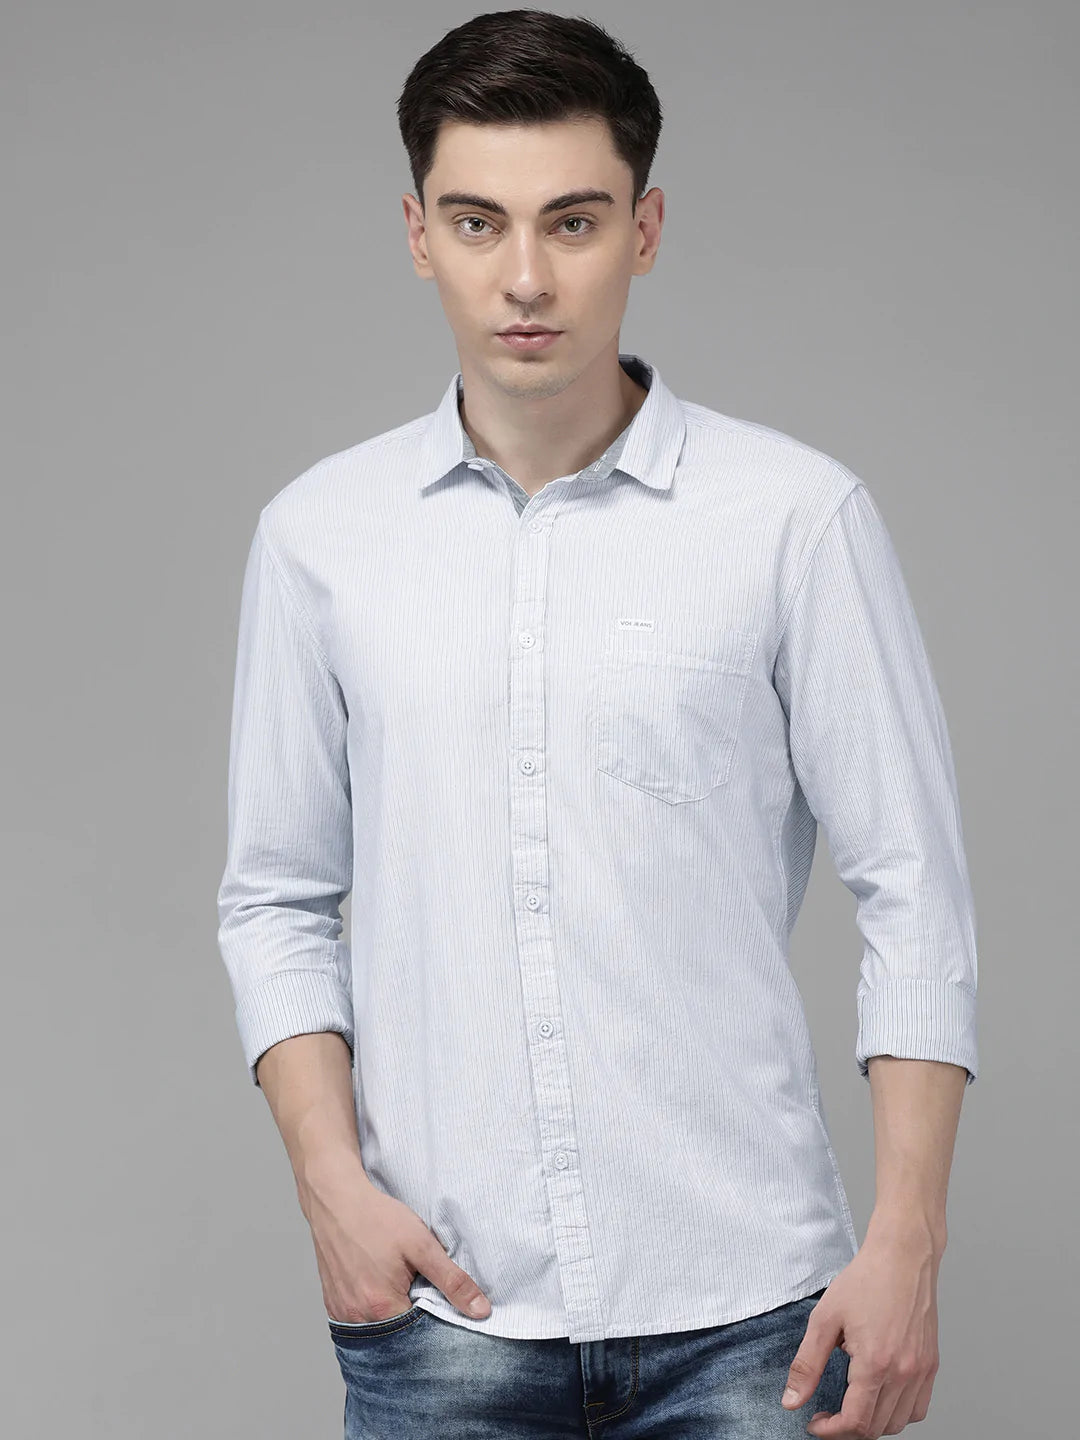 Shirts: Men's Shirts - Denim, Printed & Casual Shirts | VOI Jeans – Voi ...